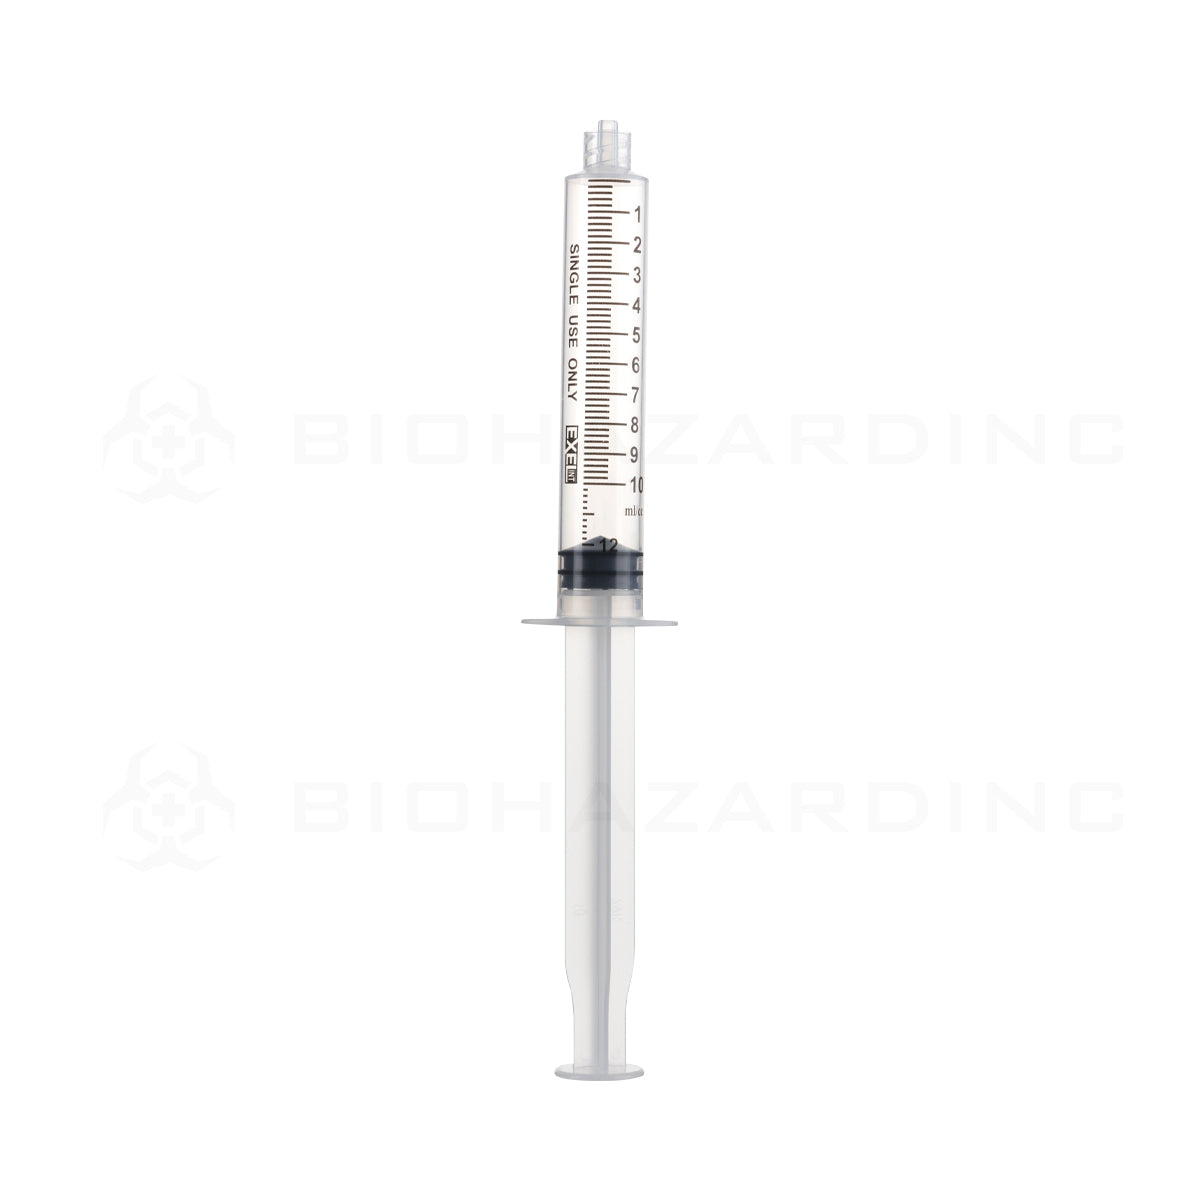 Luer Lock | Concentrate Plastic Syringe | 10ml - 1ml Increments - 100 Count Syringe Biohazard Inc   